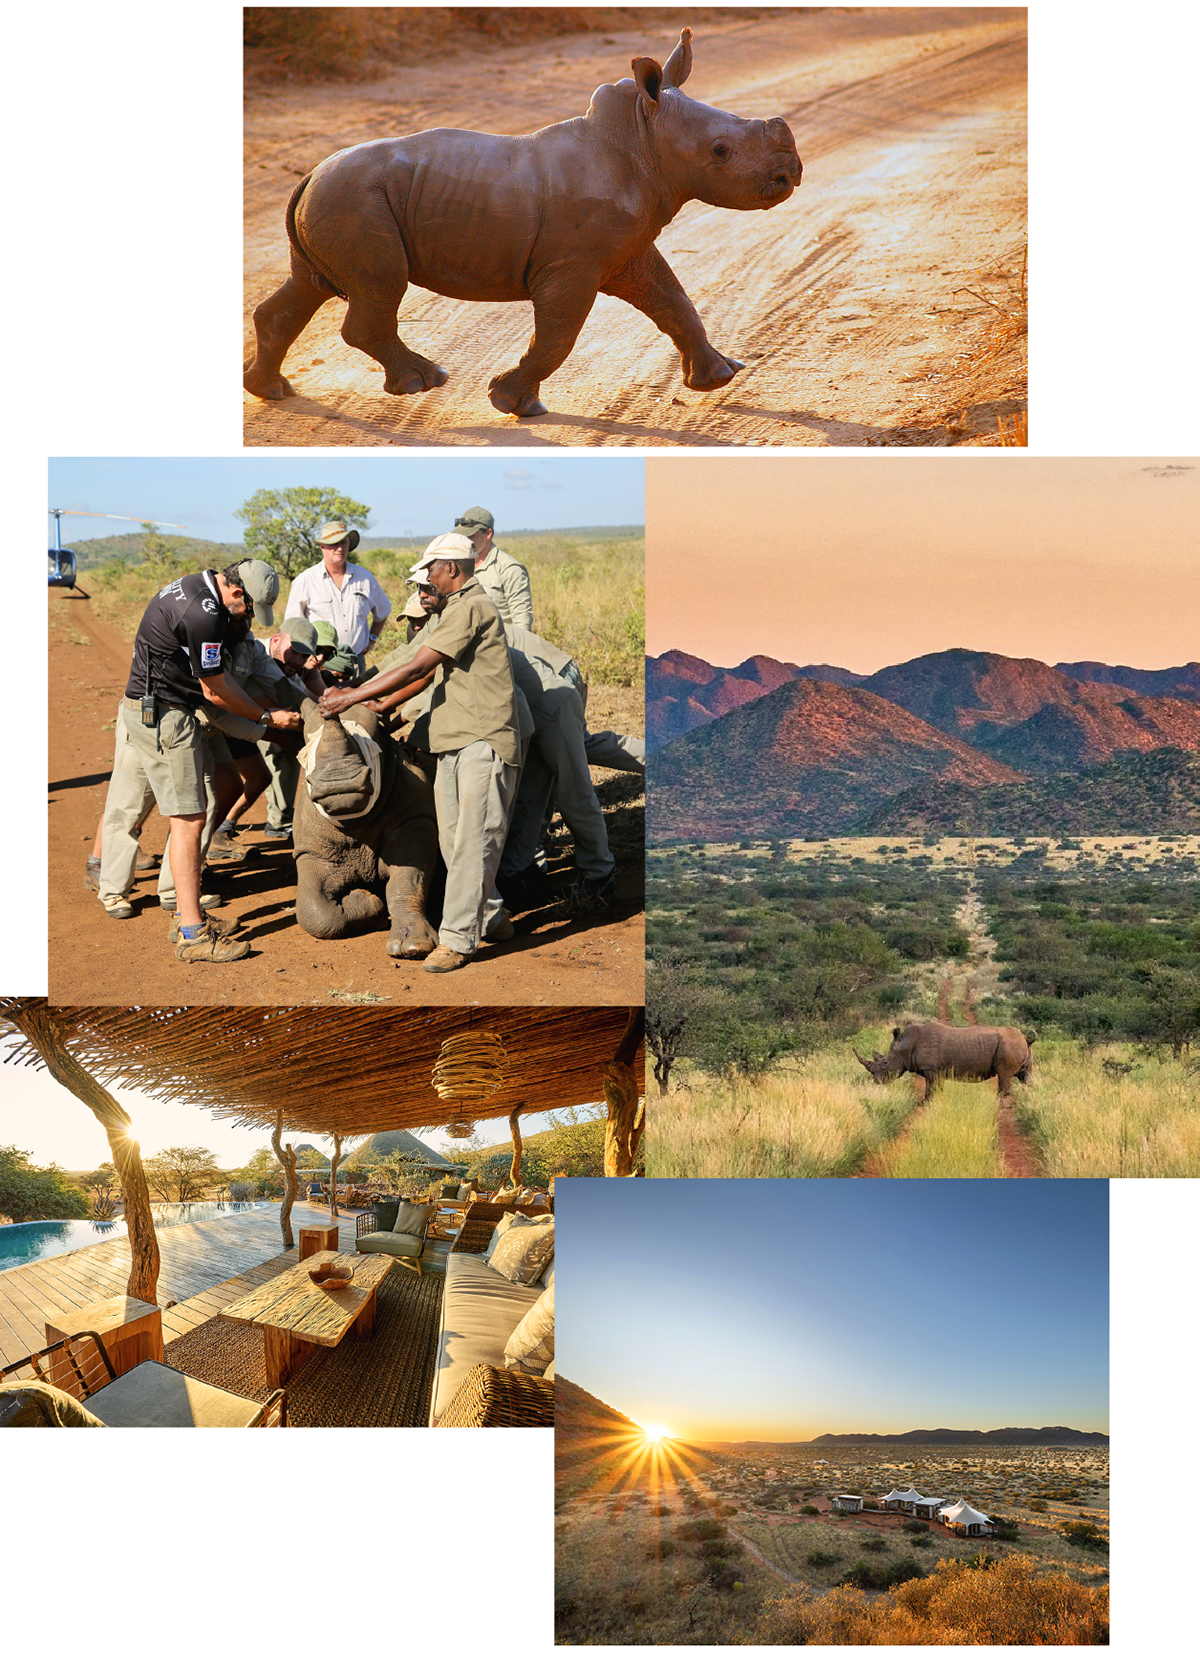 Rhino collage 2